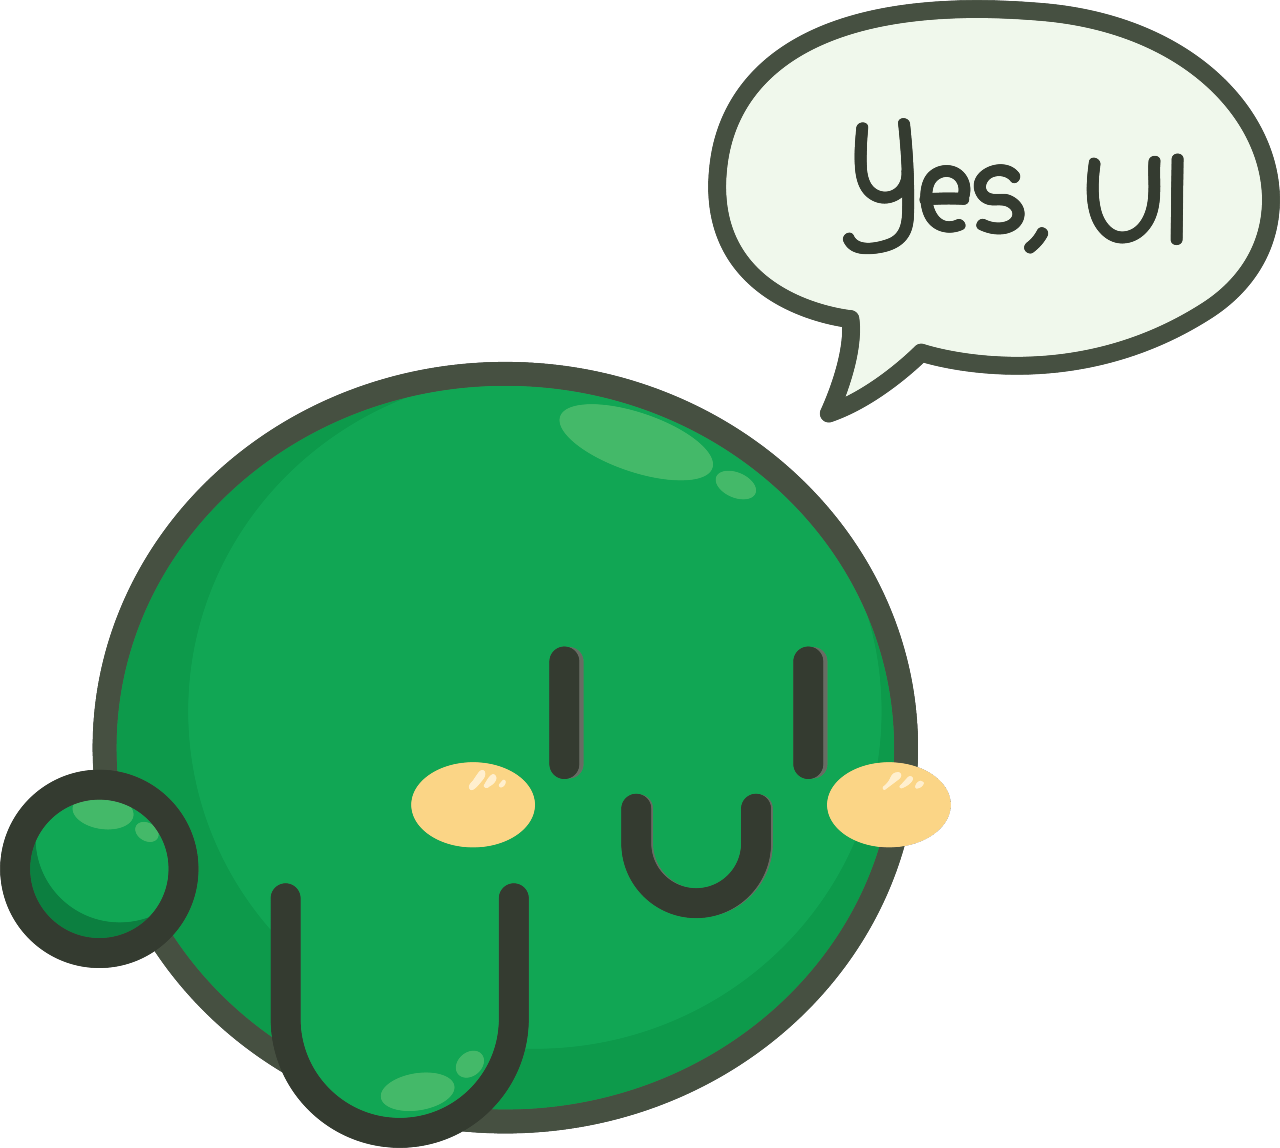 image of Yui, the OpenUI UI mascot